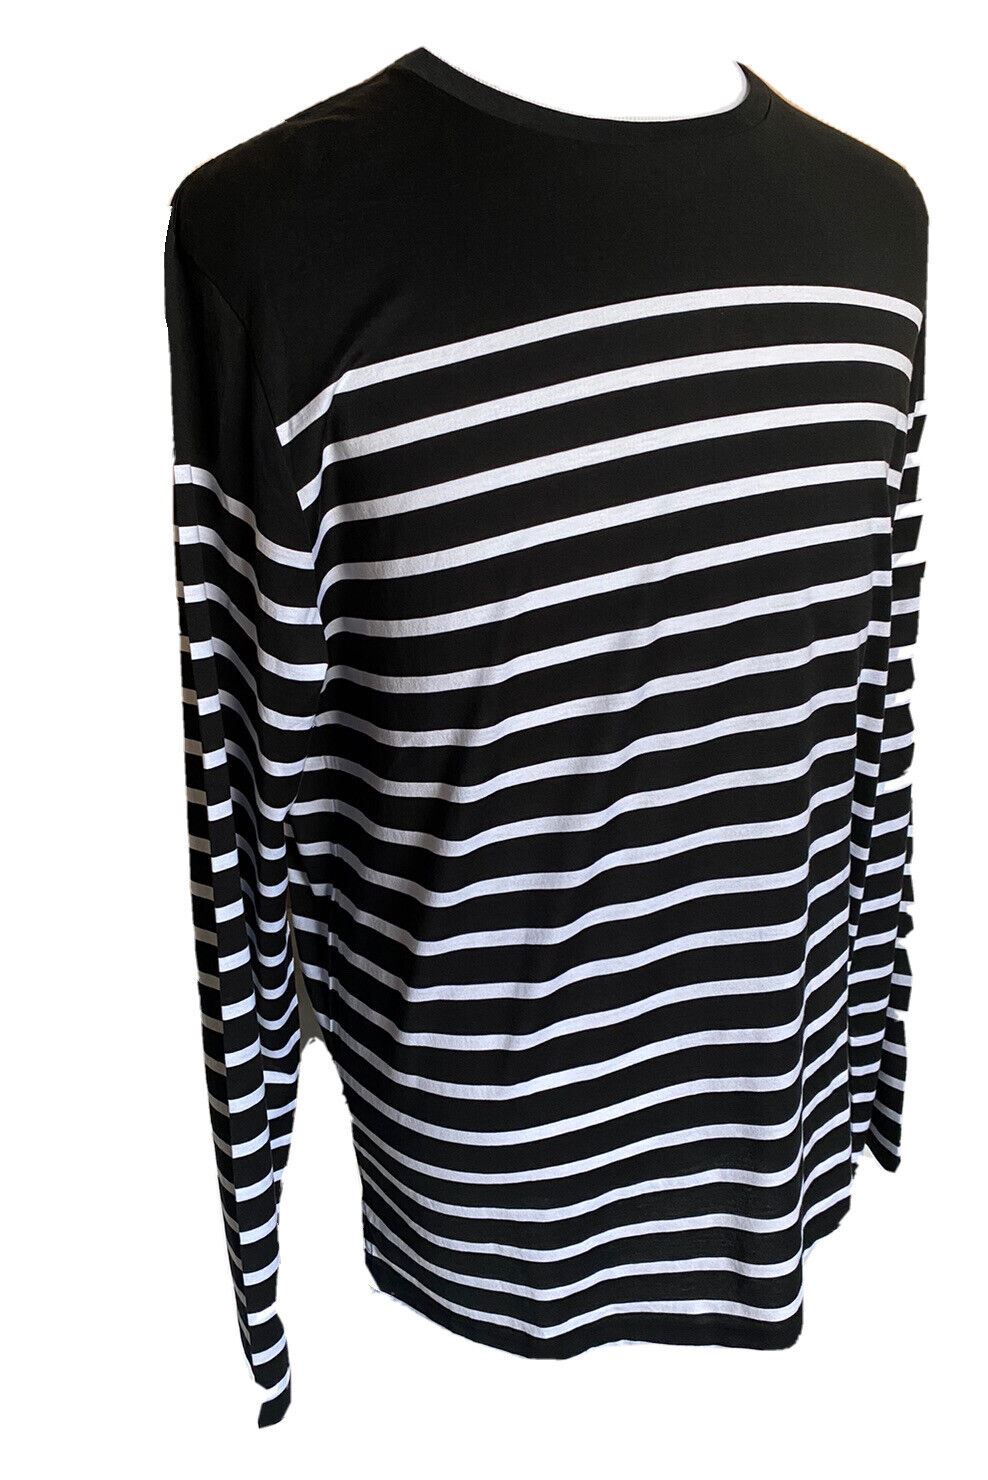 NWT $250 Ralph Lauren Purple Label Copen Black/White Striped Jersey T-Shirt XL